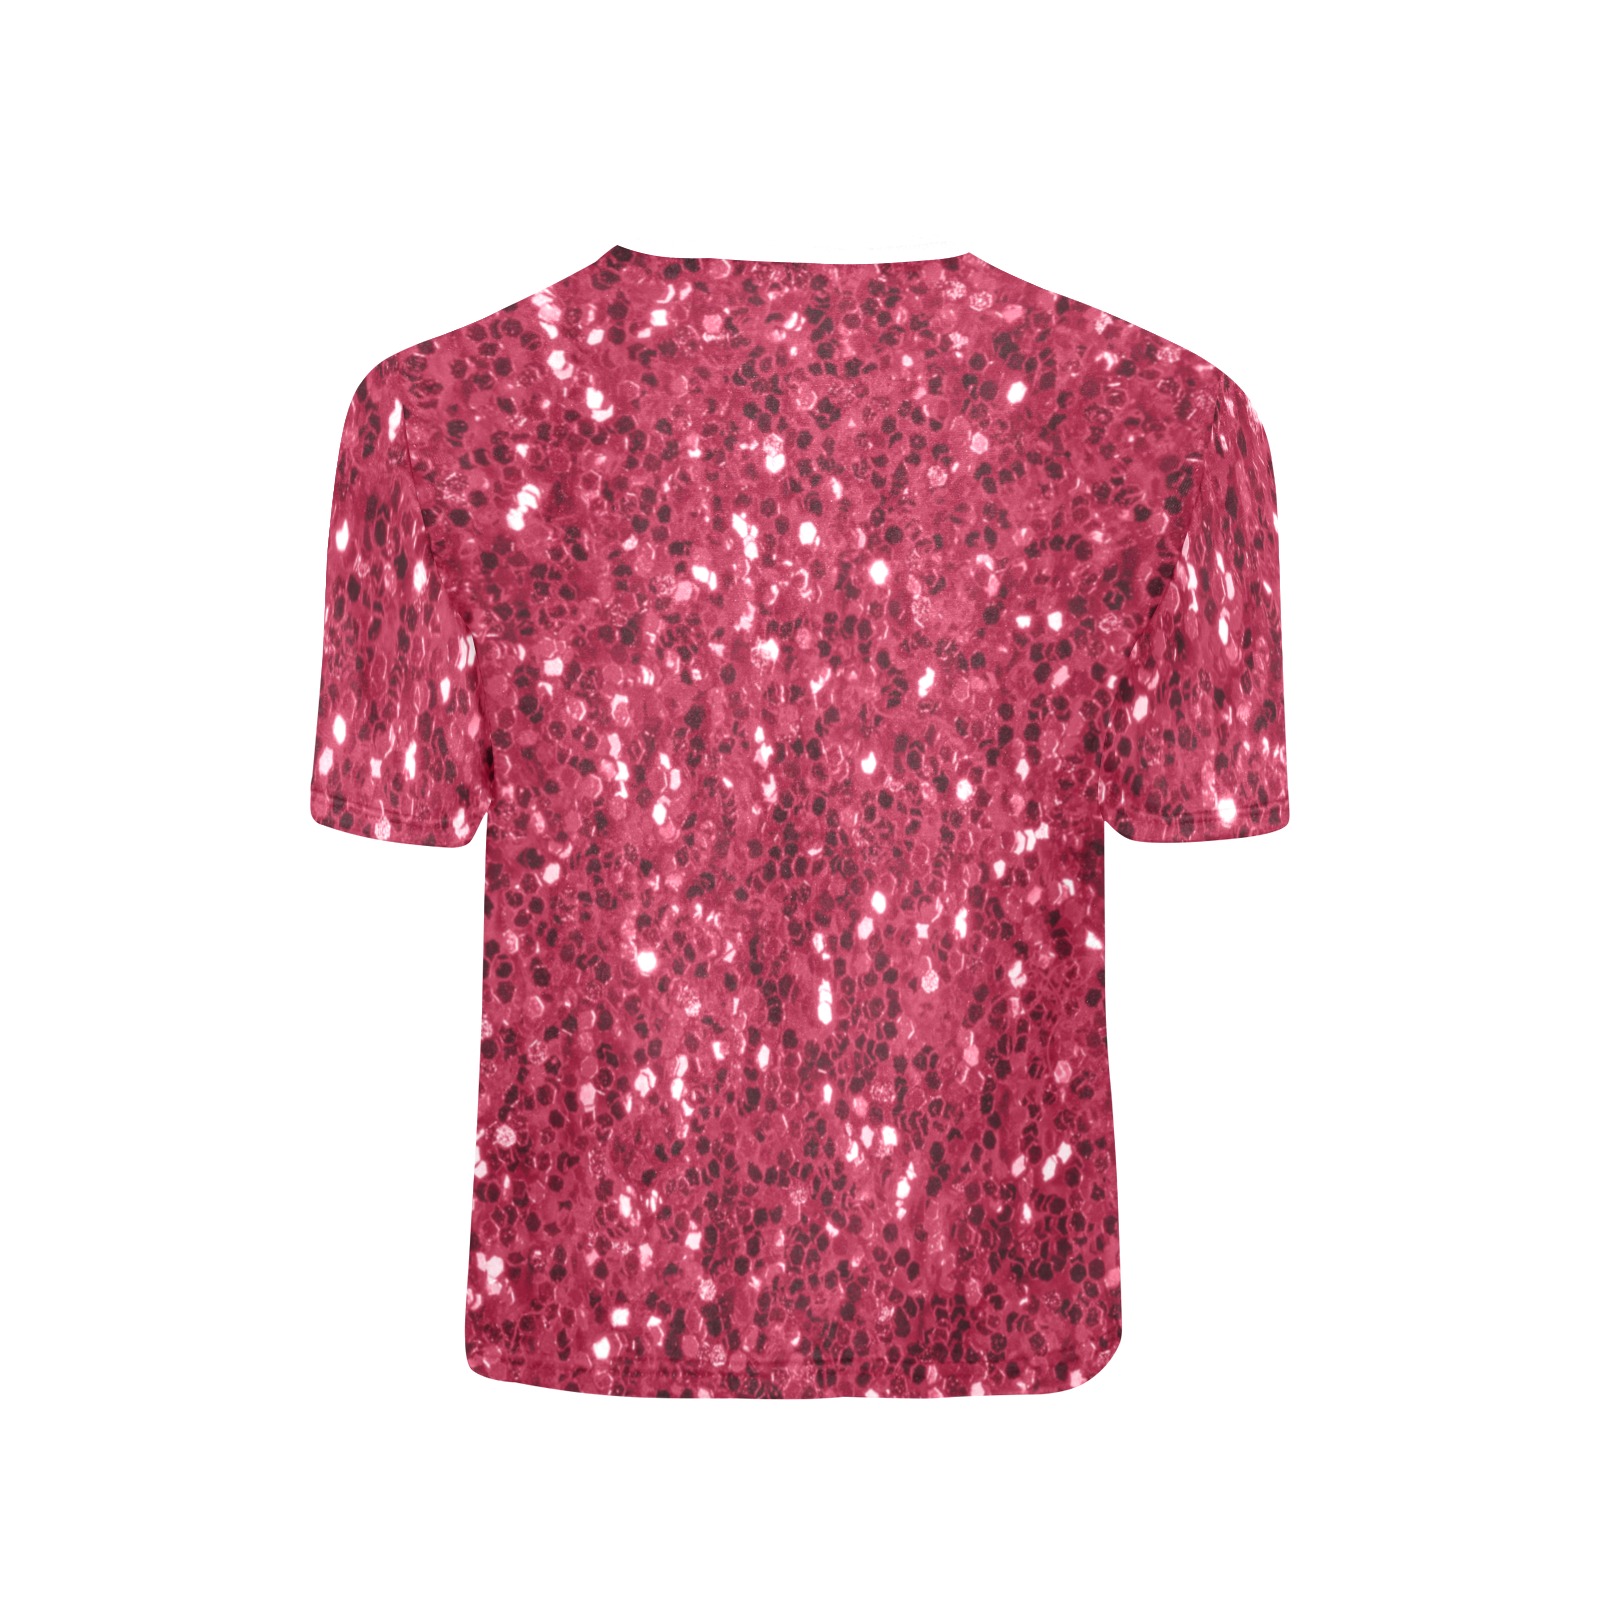 Magenta dark pink red faux sparkles glitter Little Girls' All Over Print Crew Neck T-Shirt (Model T40-2)